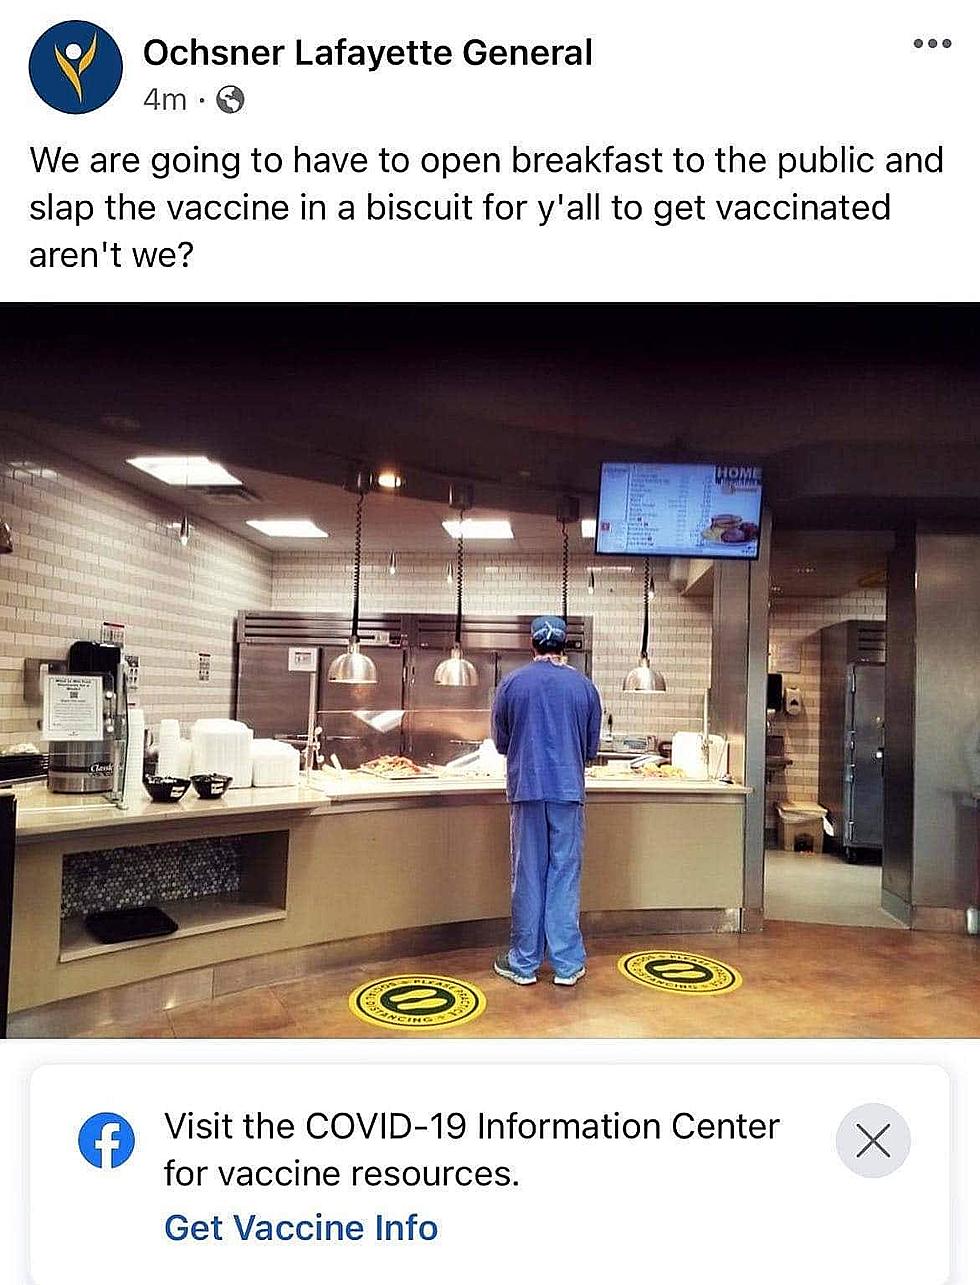 Lafayette Hospital Criticized for Vaccine Joke, But Was It Funny?